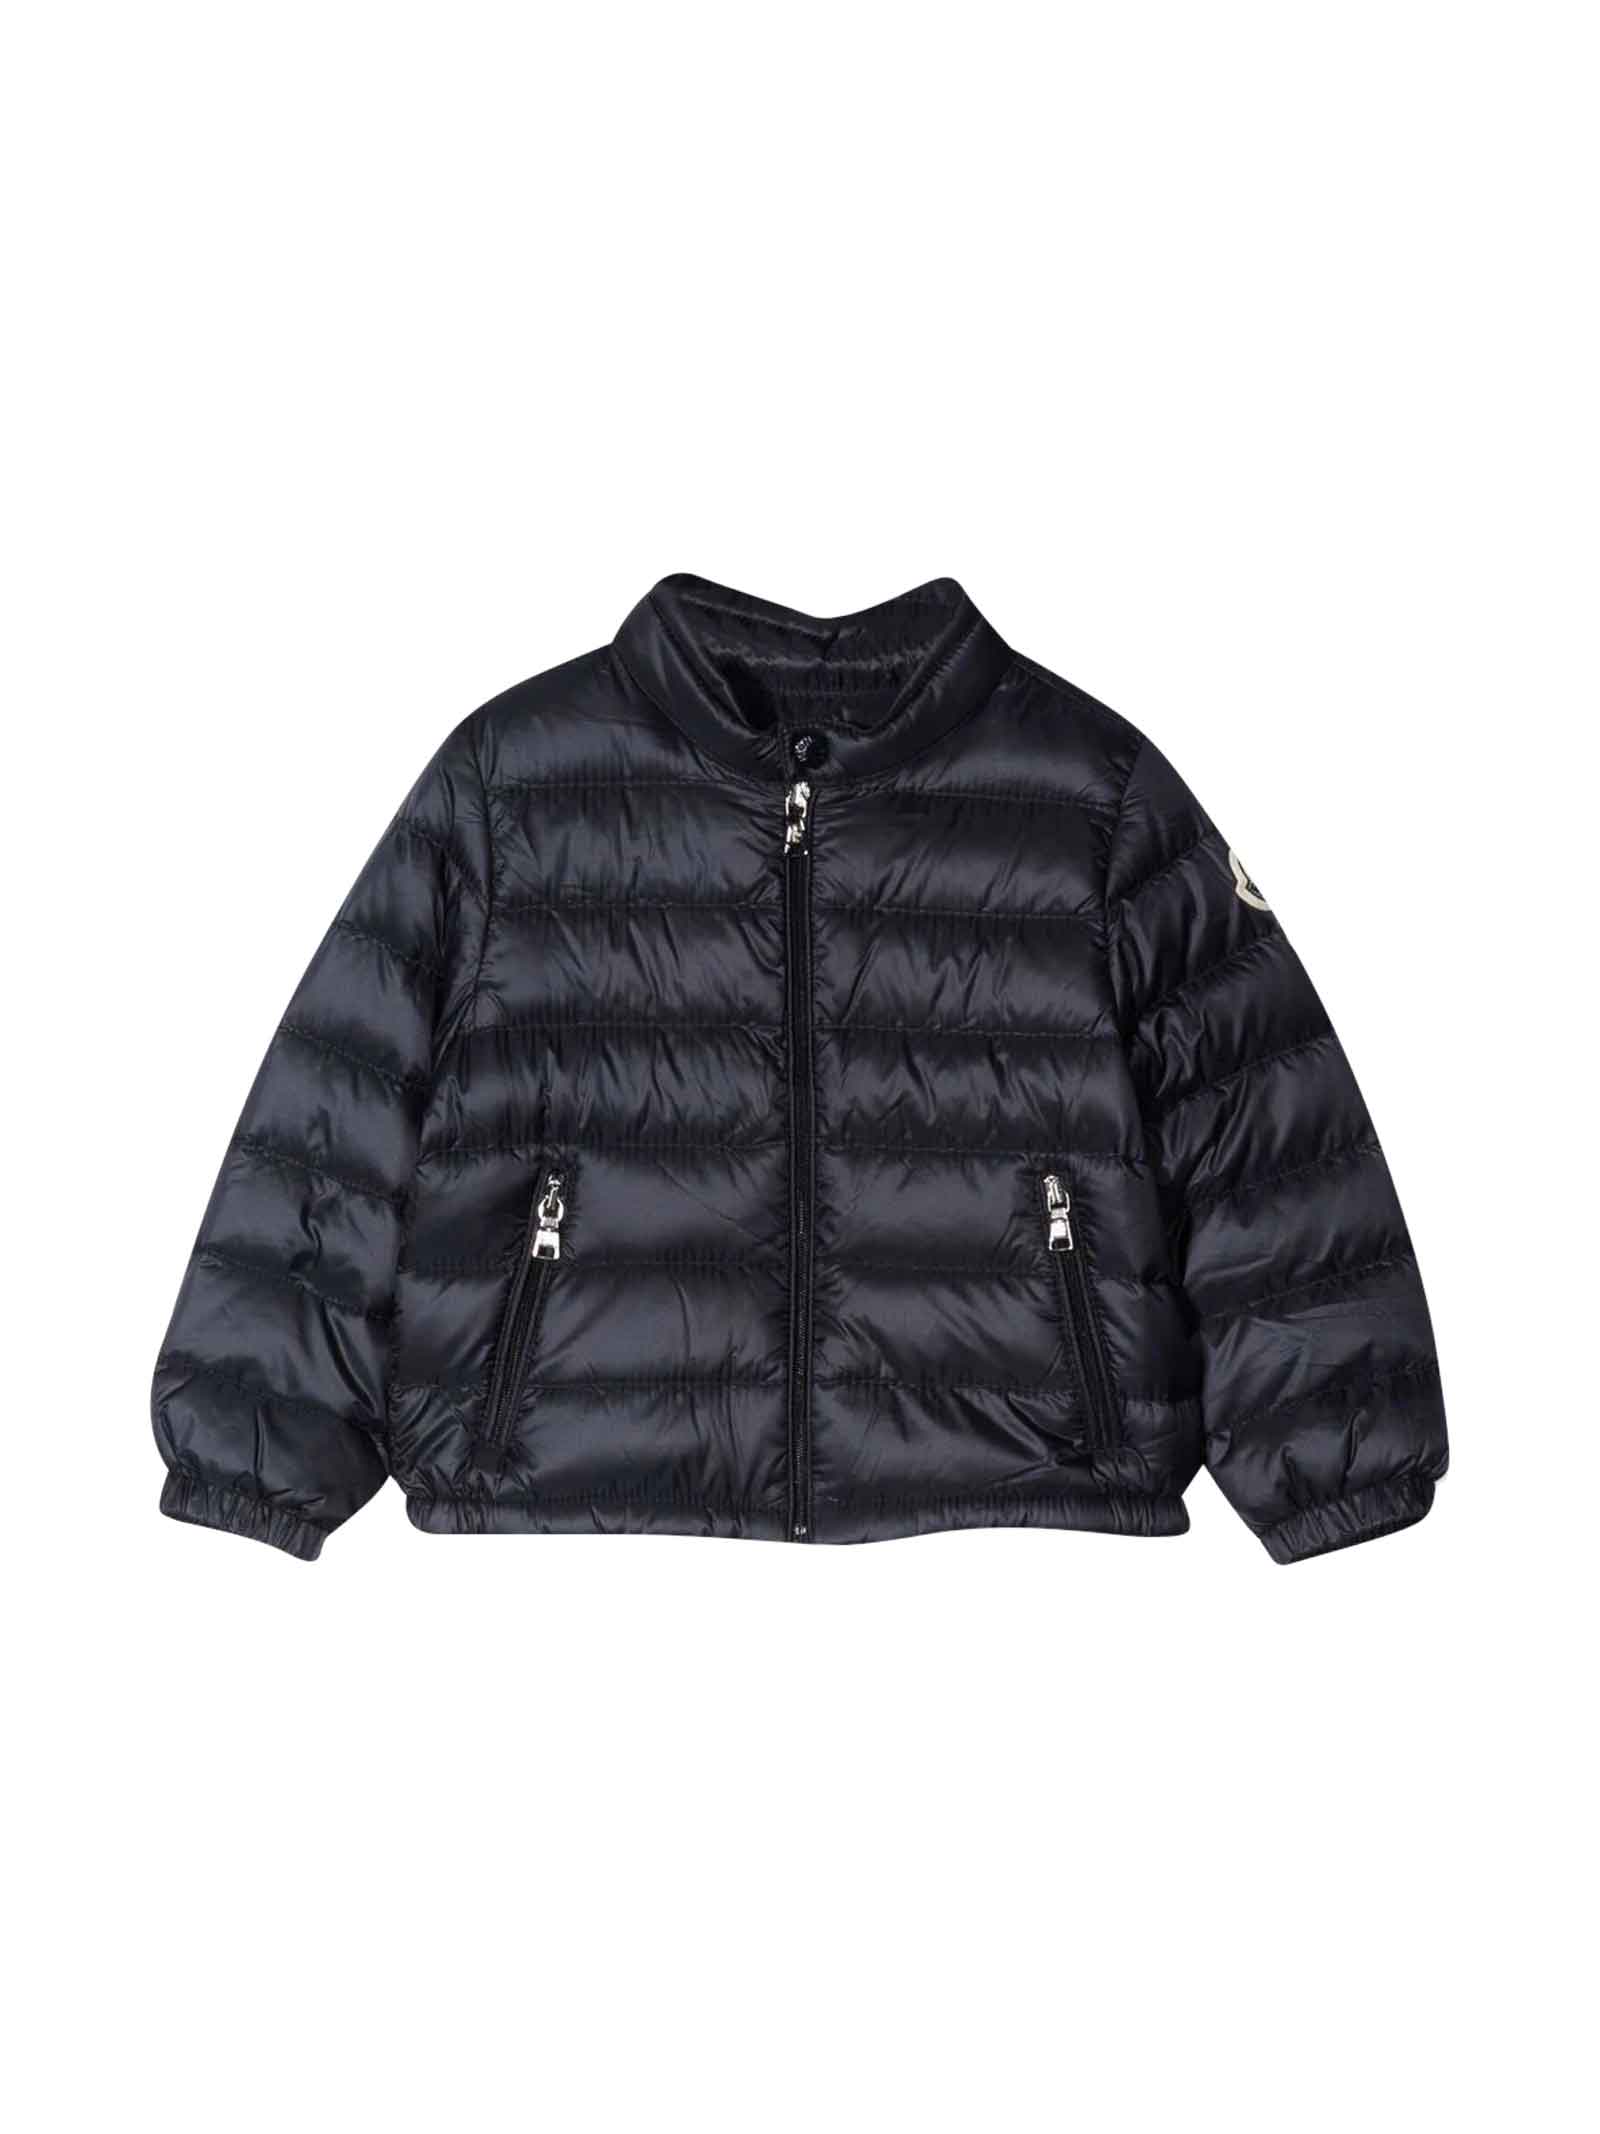 Moncler Enfant Unisex Black Padded Jacket